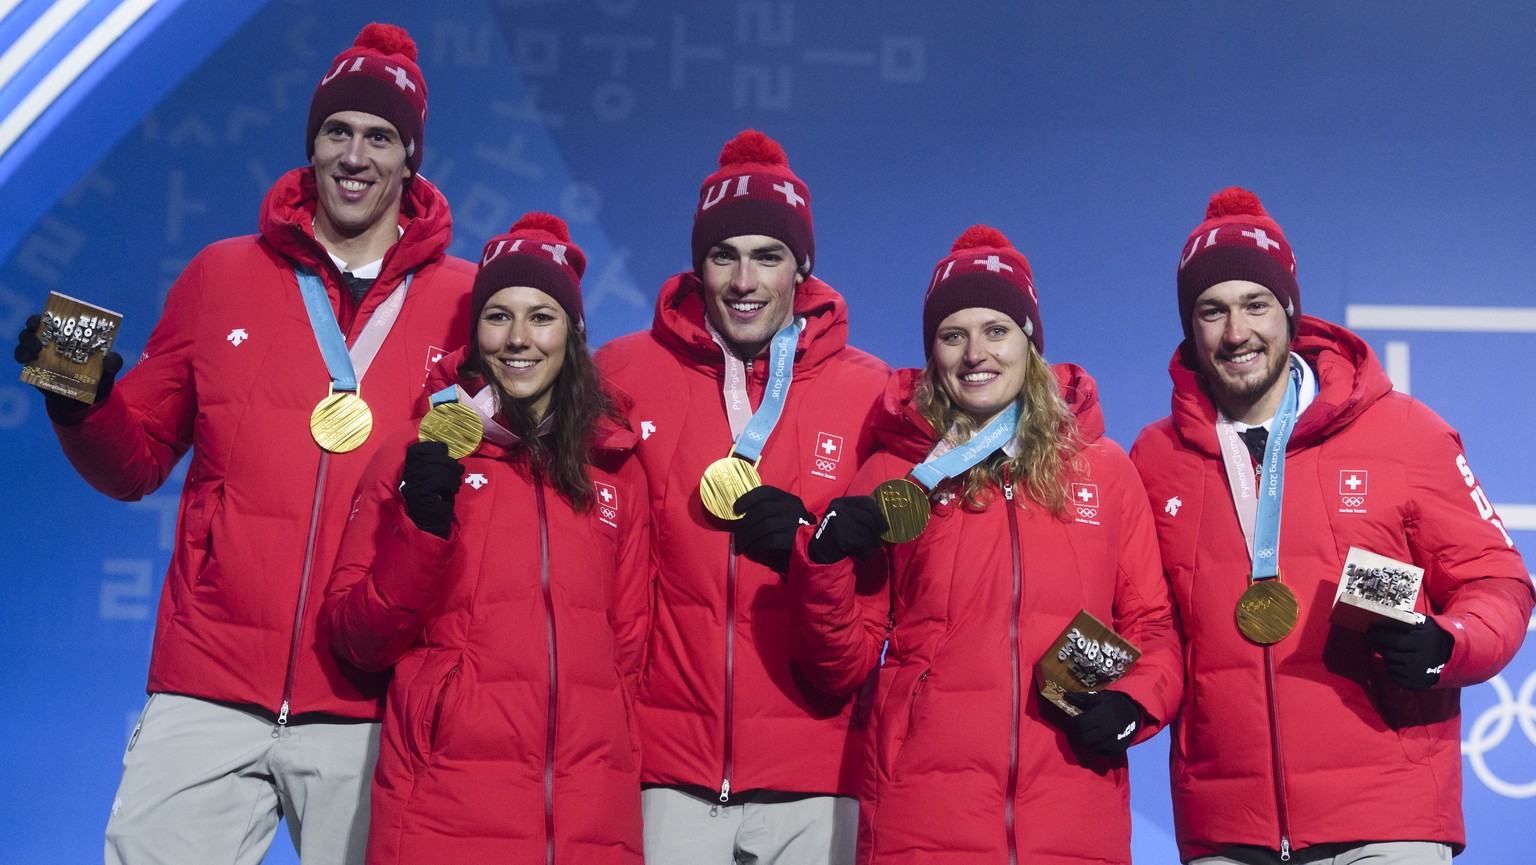 Gold medal winner Team Switzerland with Ramon Zenhaeusern, Wendy Holdener, Daniel Yule, Denise Feierabend, and Luca Aerni, from left, pose during the victory ceremony on the Medal Plaza for the alpine ...